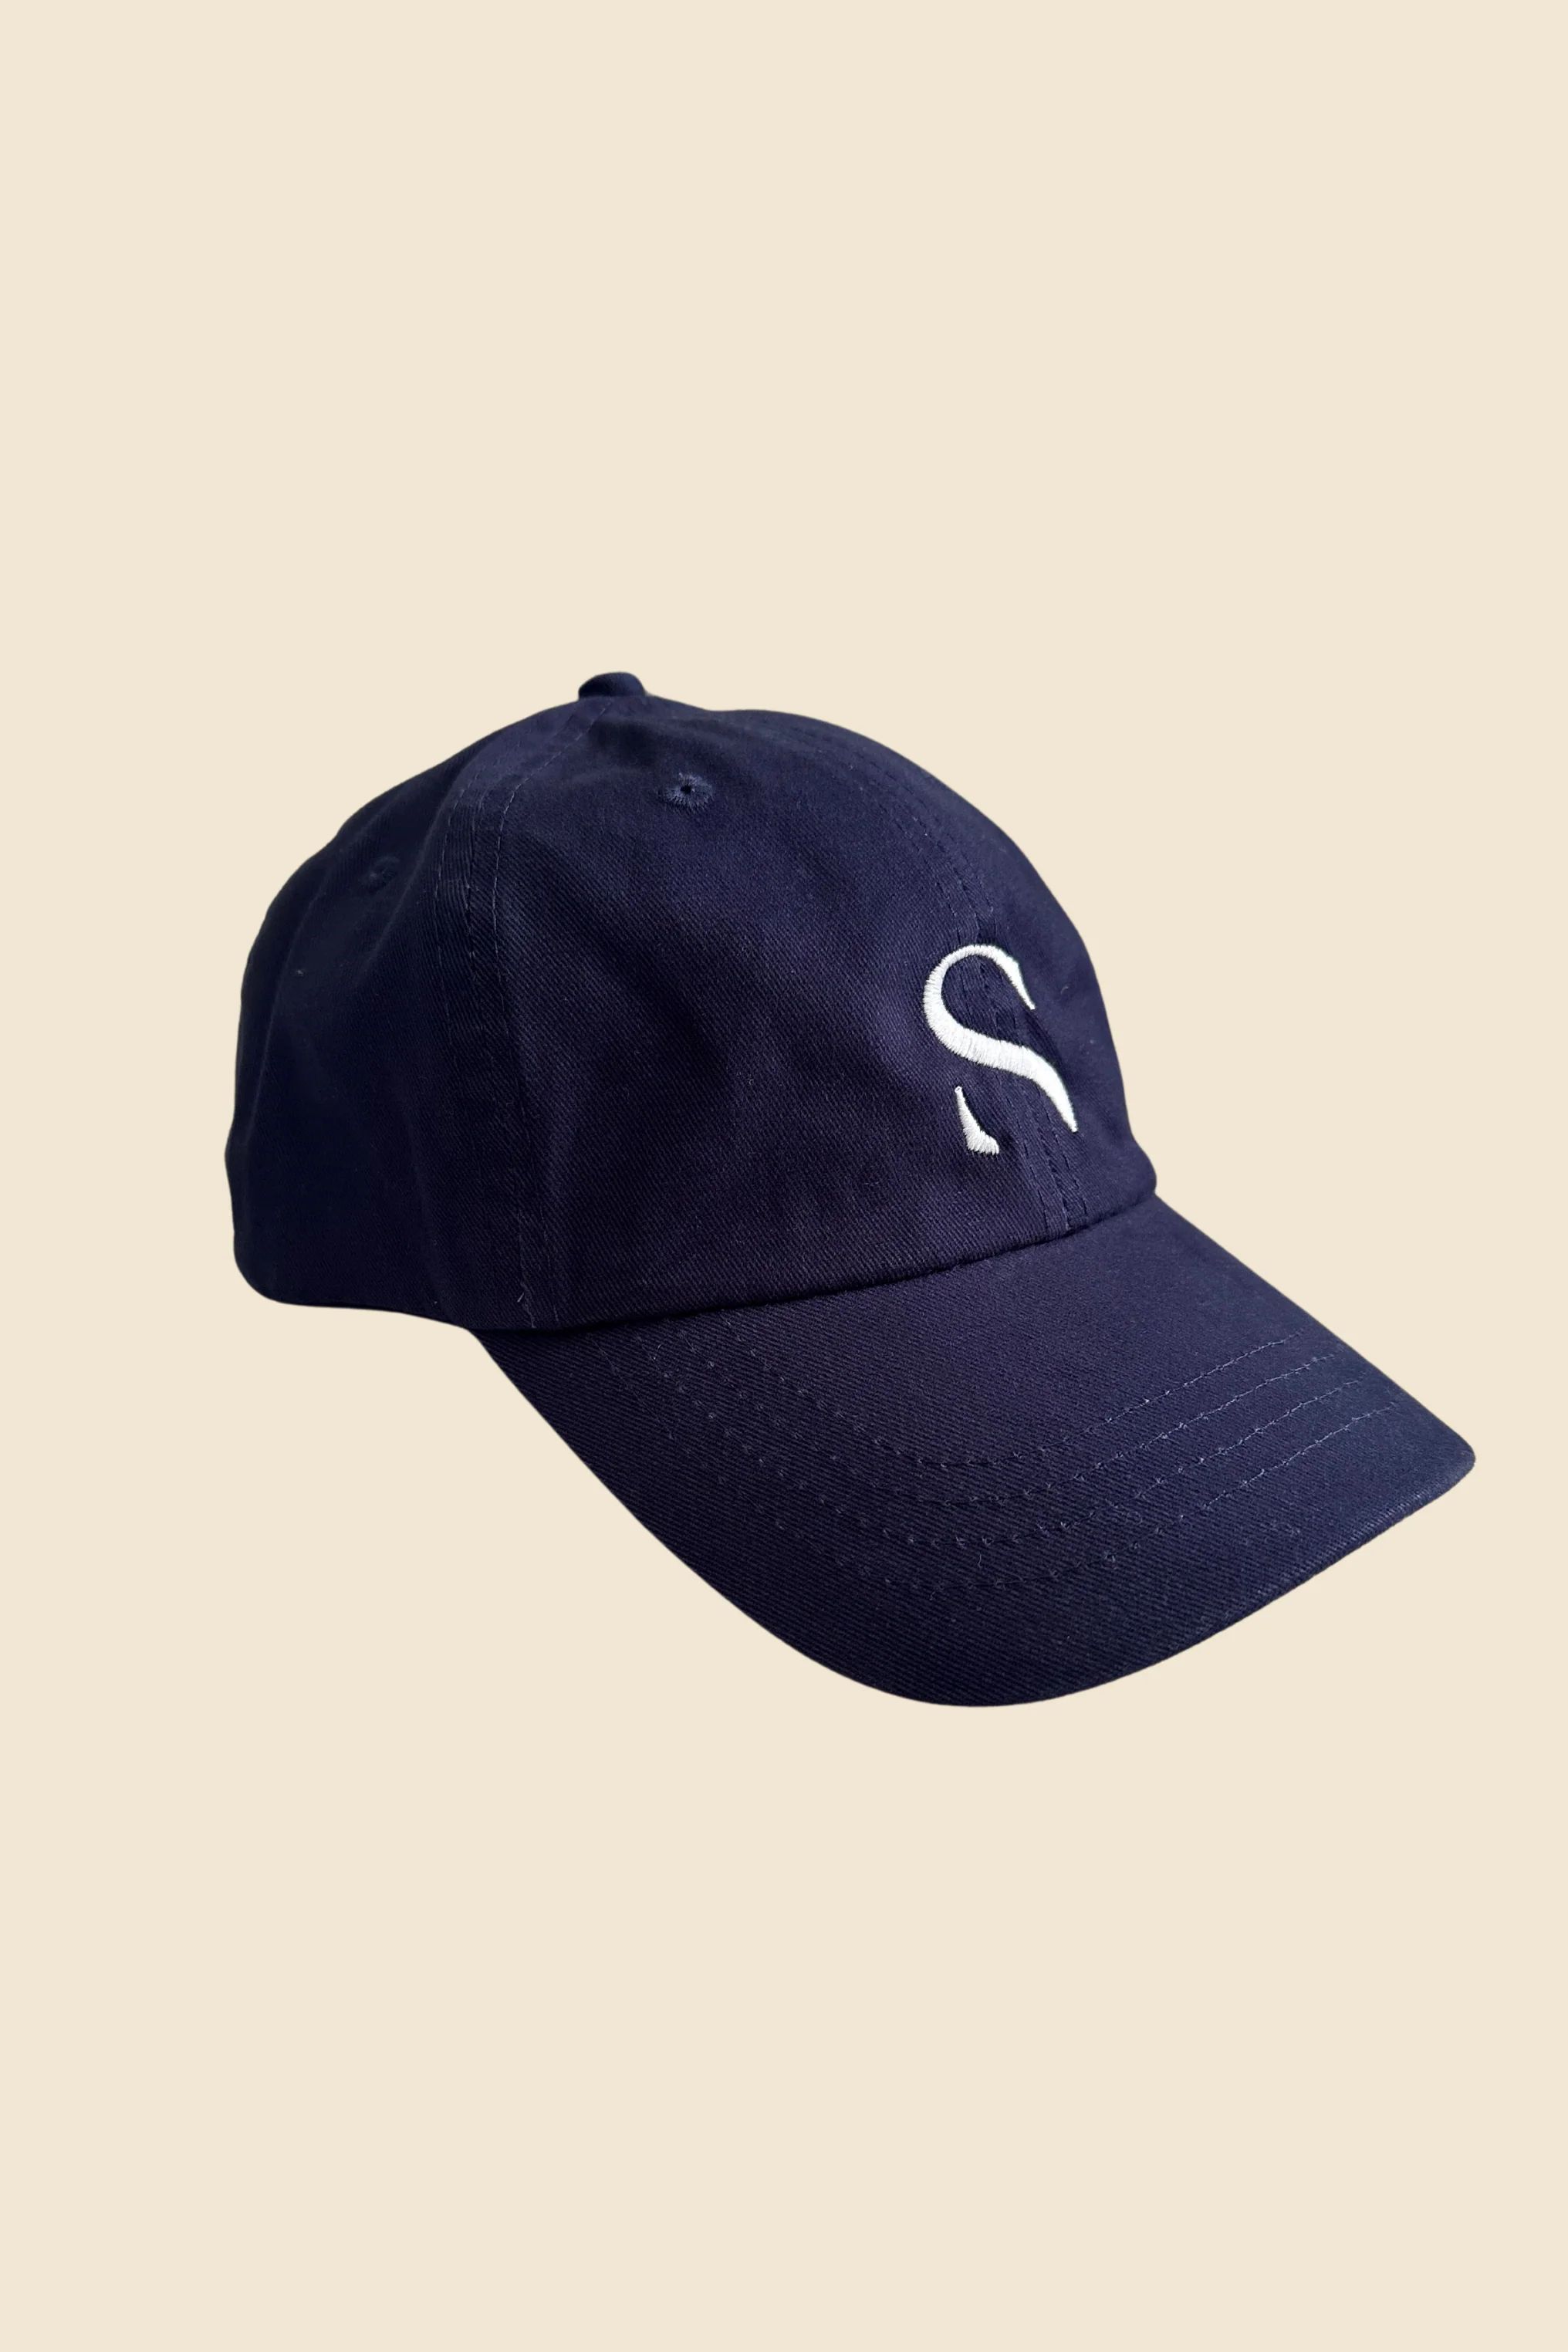 Sitano's Merch with a Mission Baseball Cap | Sitano